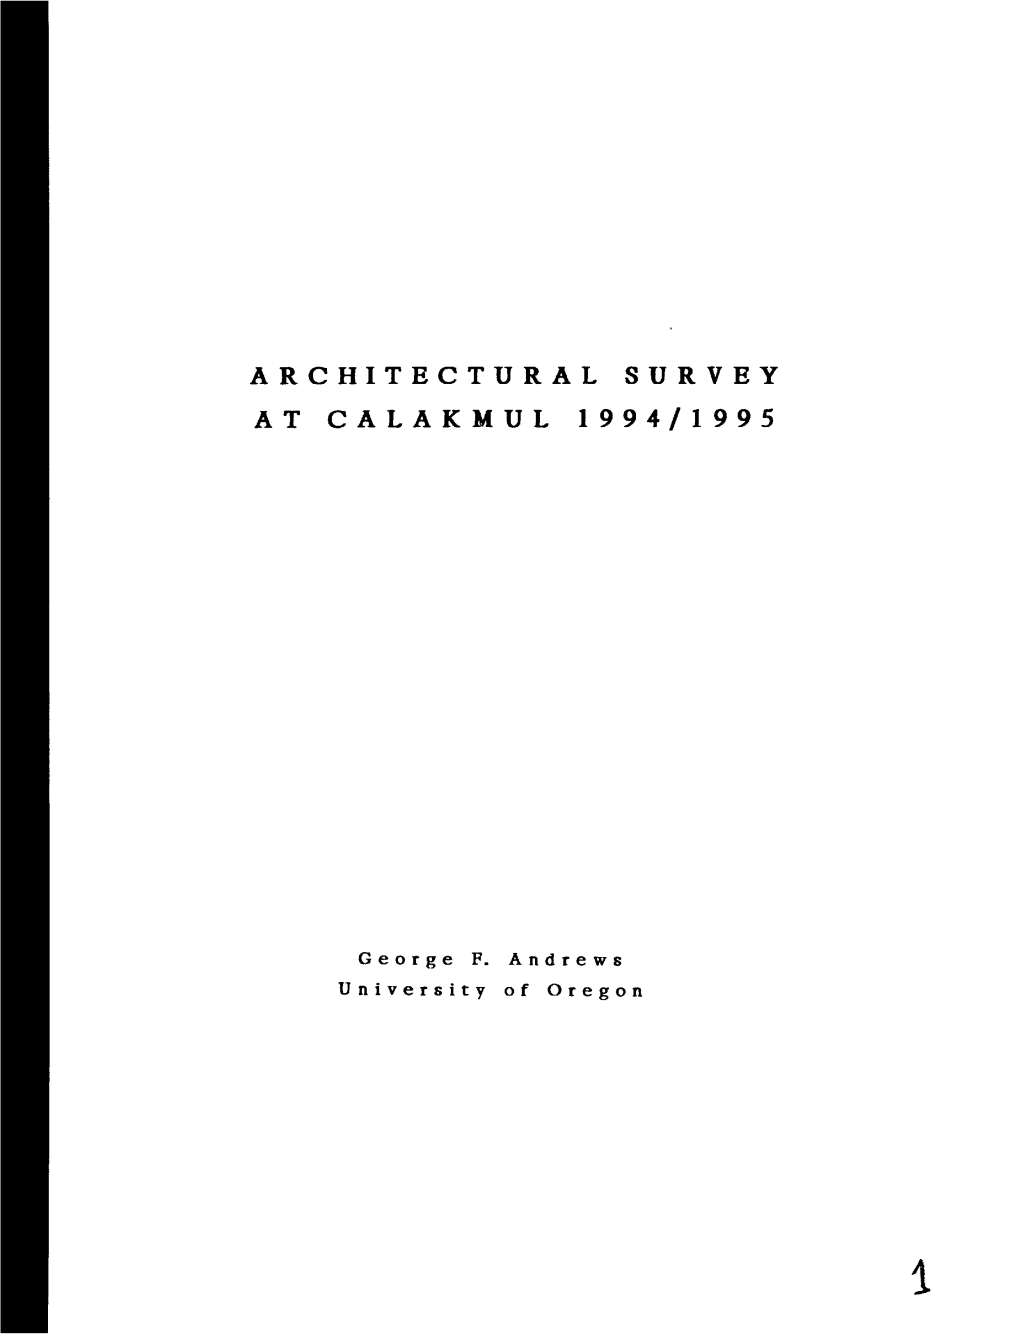 Architectural Survey at Calakmul 1994/1995